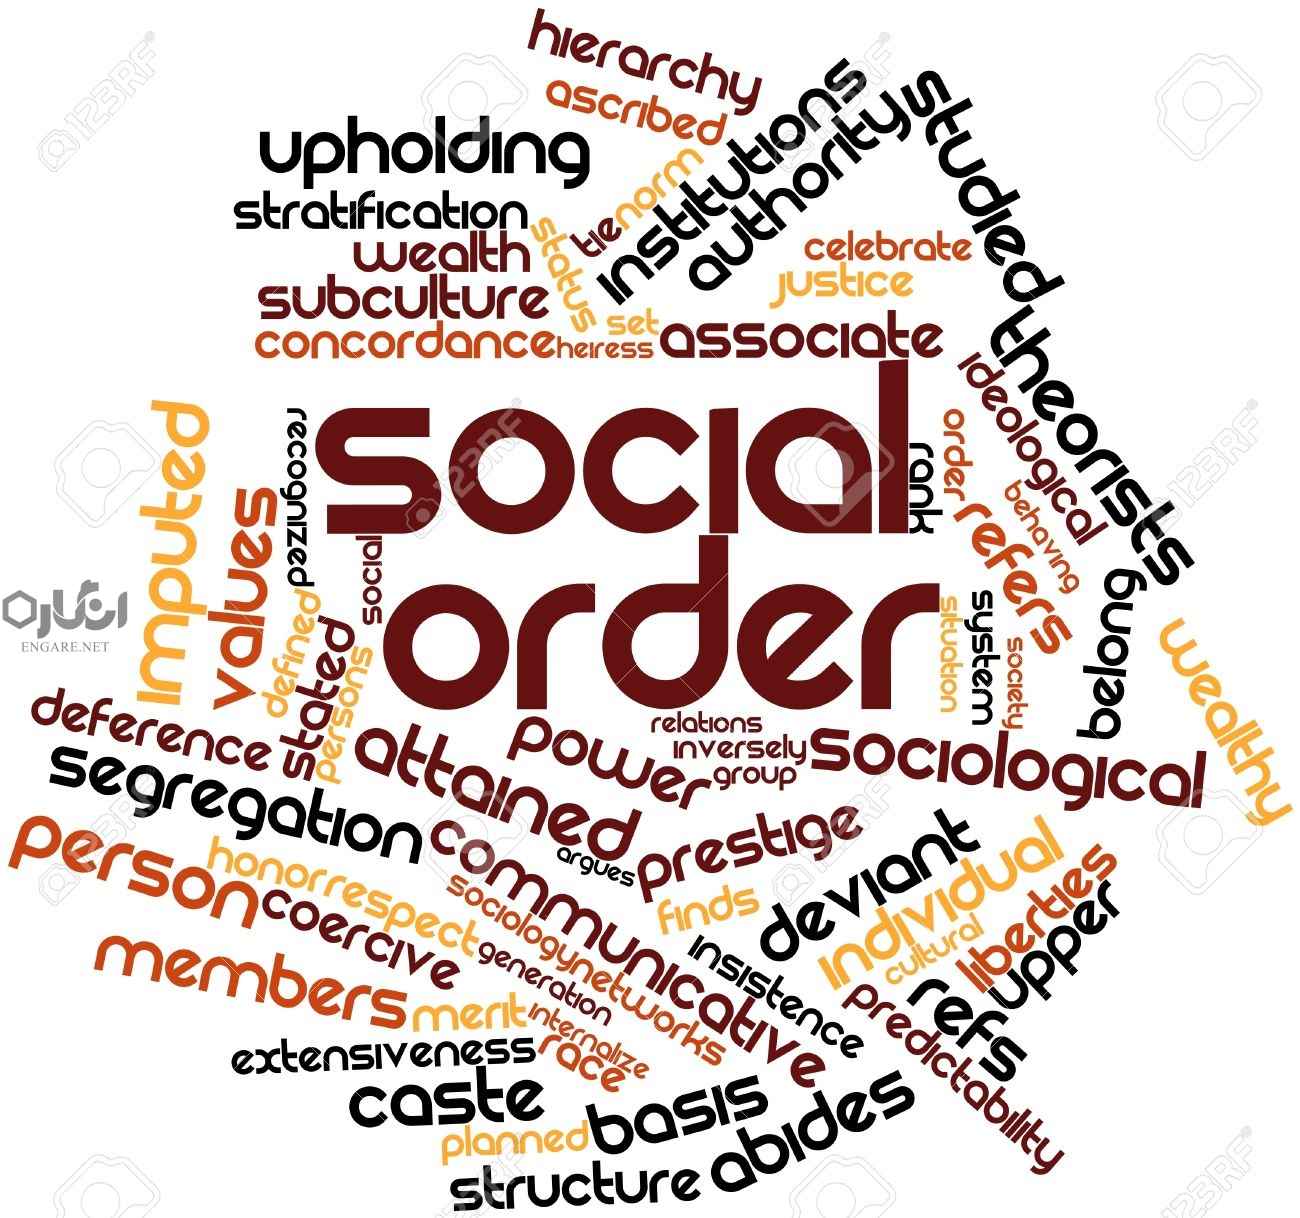 Social order terms - در دفاع از مقاومت‌های فردی(تقدیم به تمام افشاگران) - محمدمهدی اردبیلی, فساد سیستمی, فساد, رسانه, دانشگاه, حقوق نجومی, جامعه, انقلاب فرهنگی, املاک نجومی